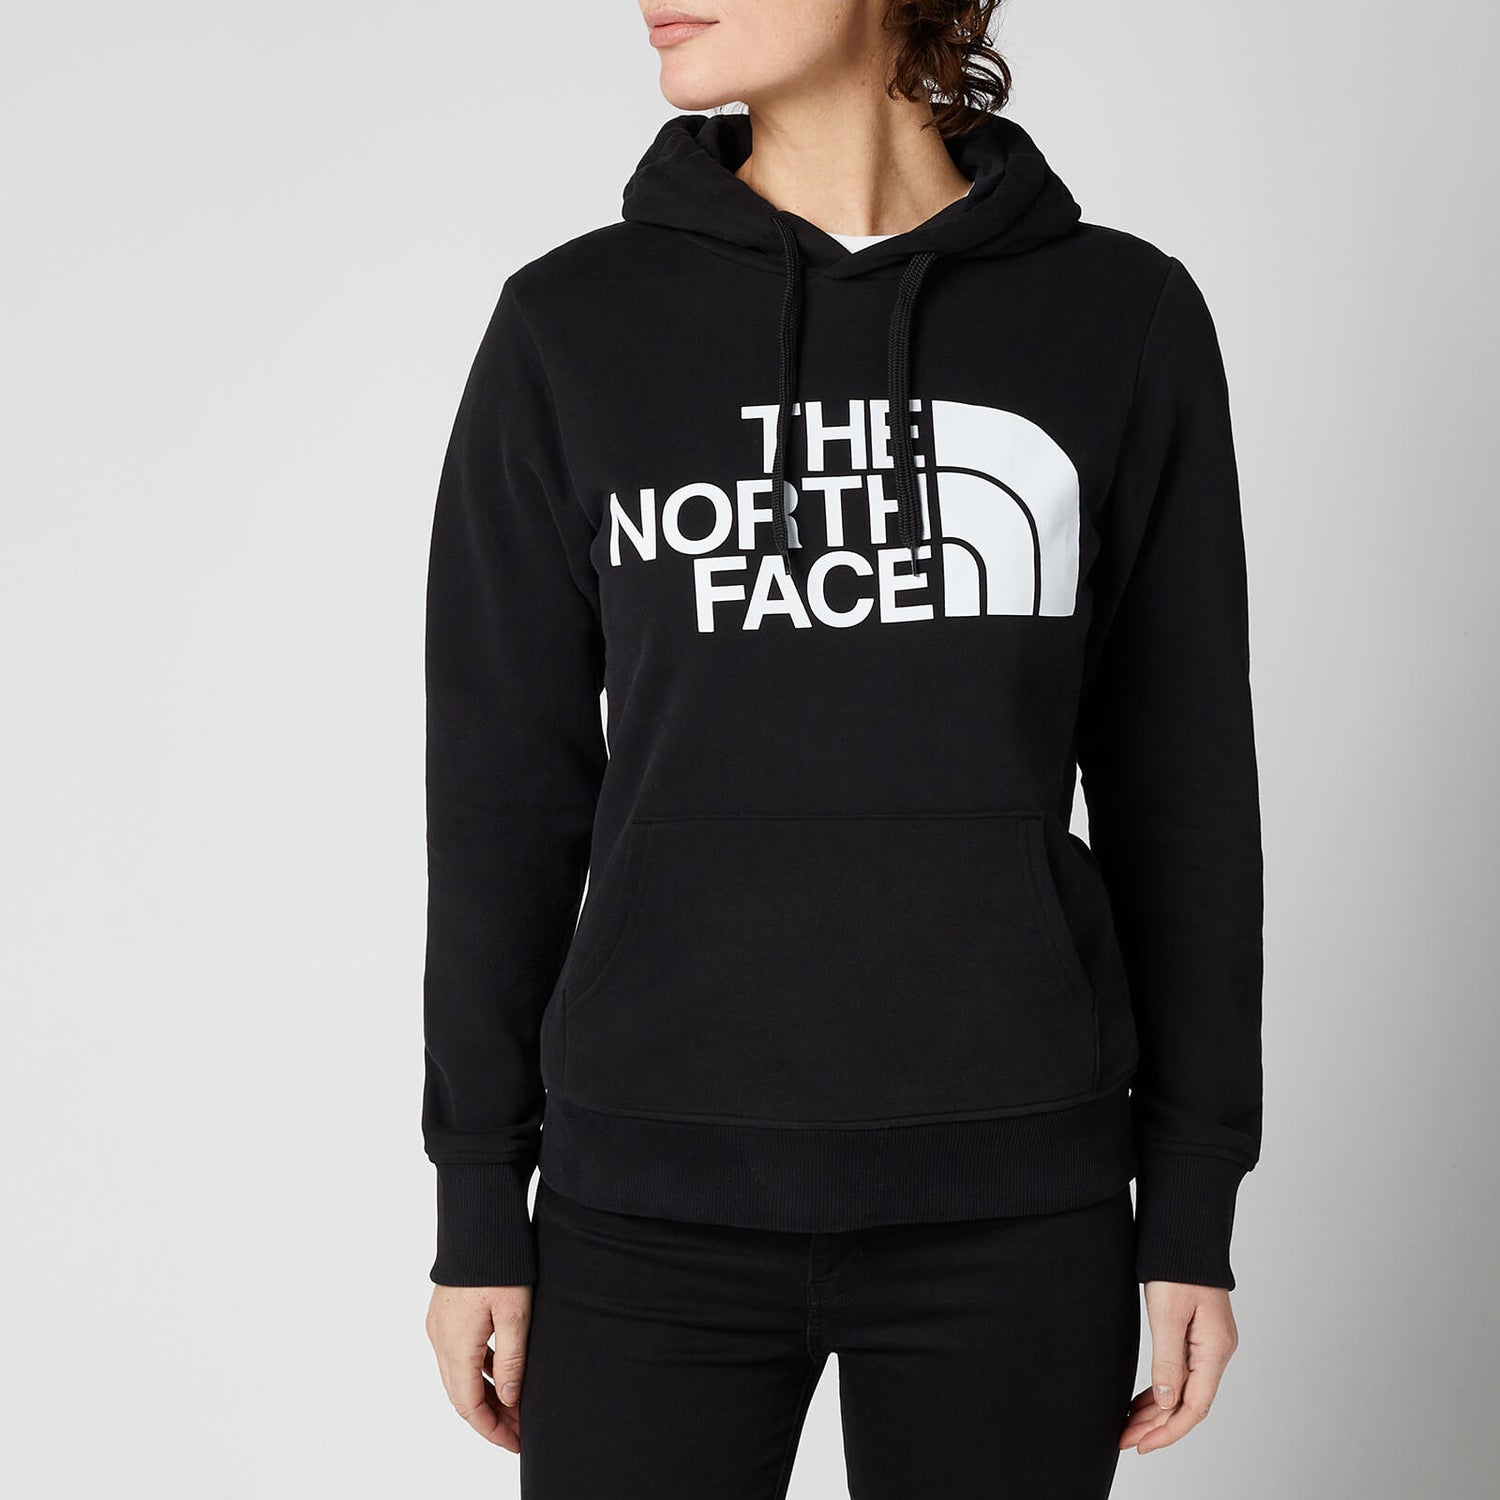 The North Face Women's Standard Hoodie - Black | TheHut.com